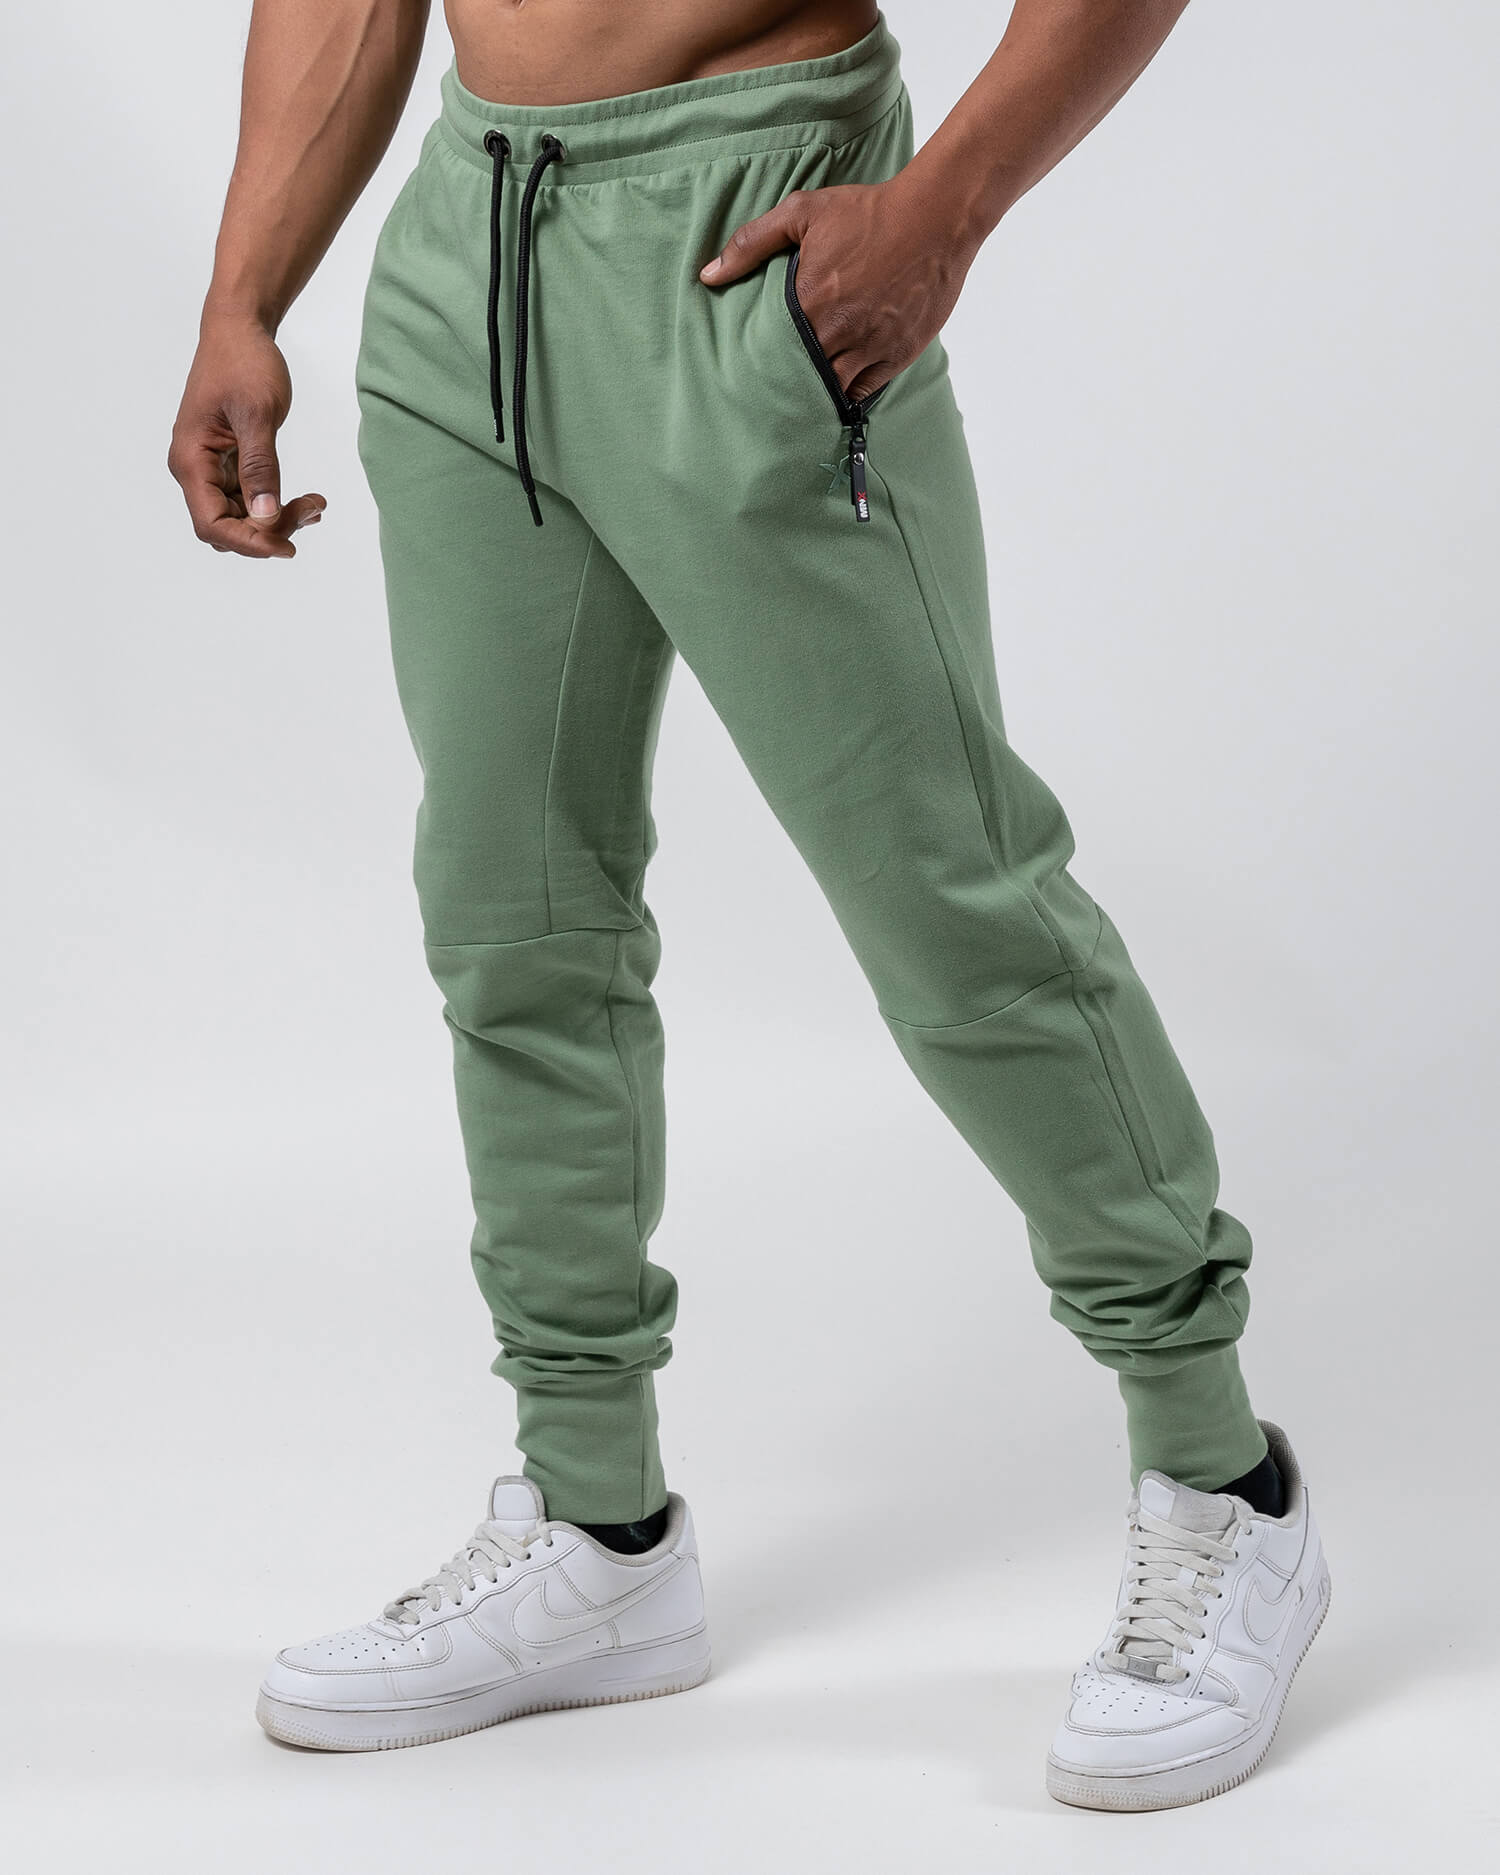 Buy Magic Light Green Slim Fit Joggers Men's Jogger Pants Size 28